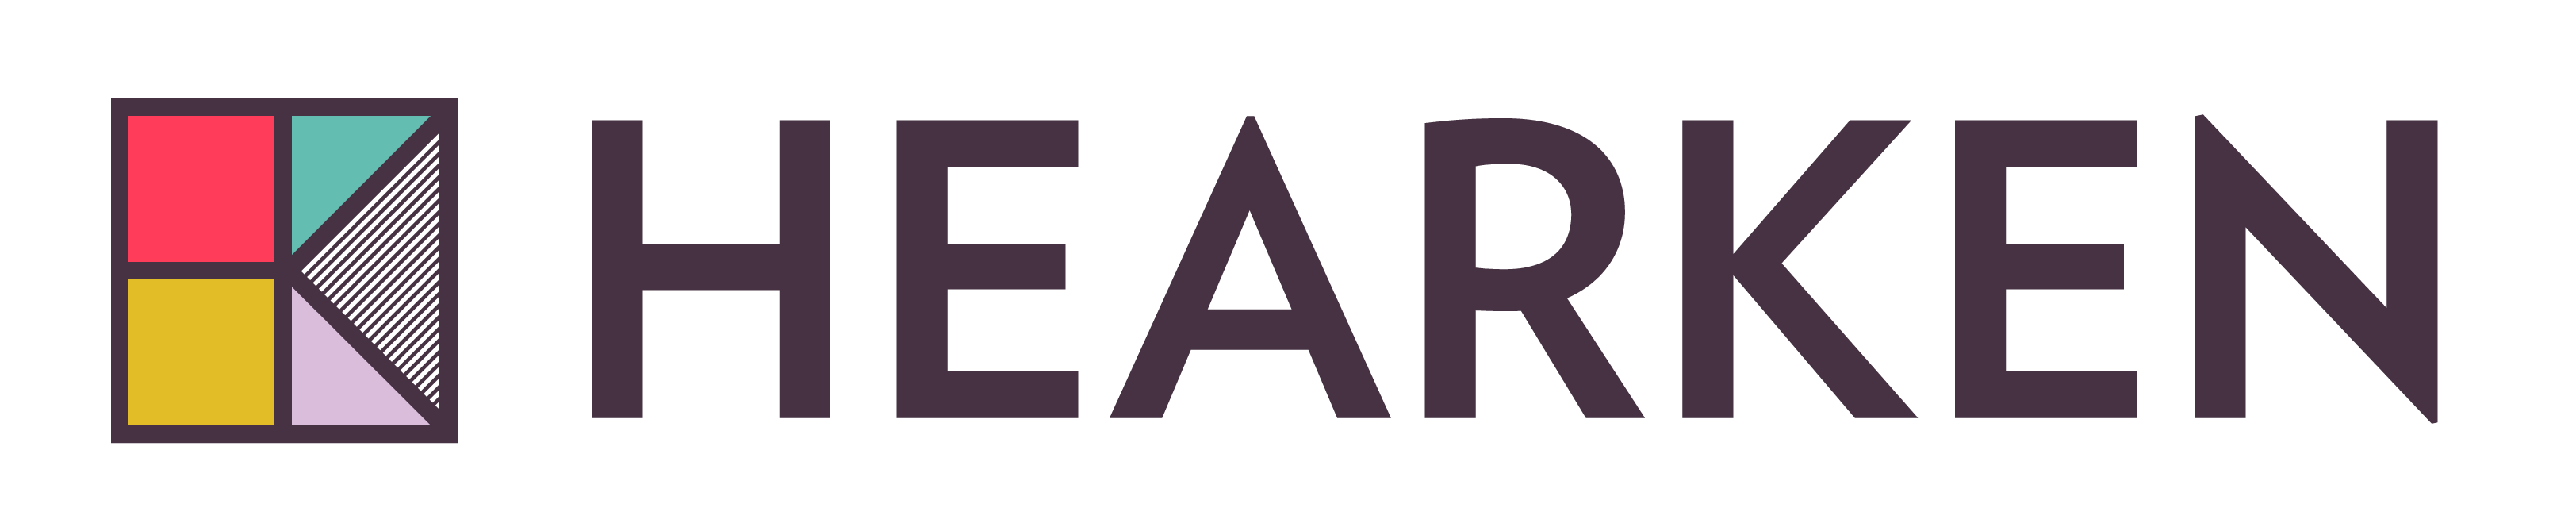 hearken logo